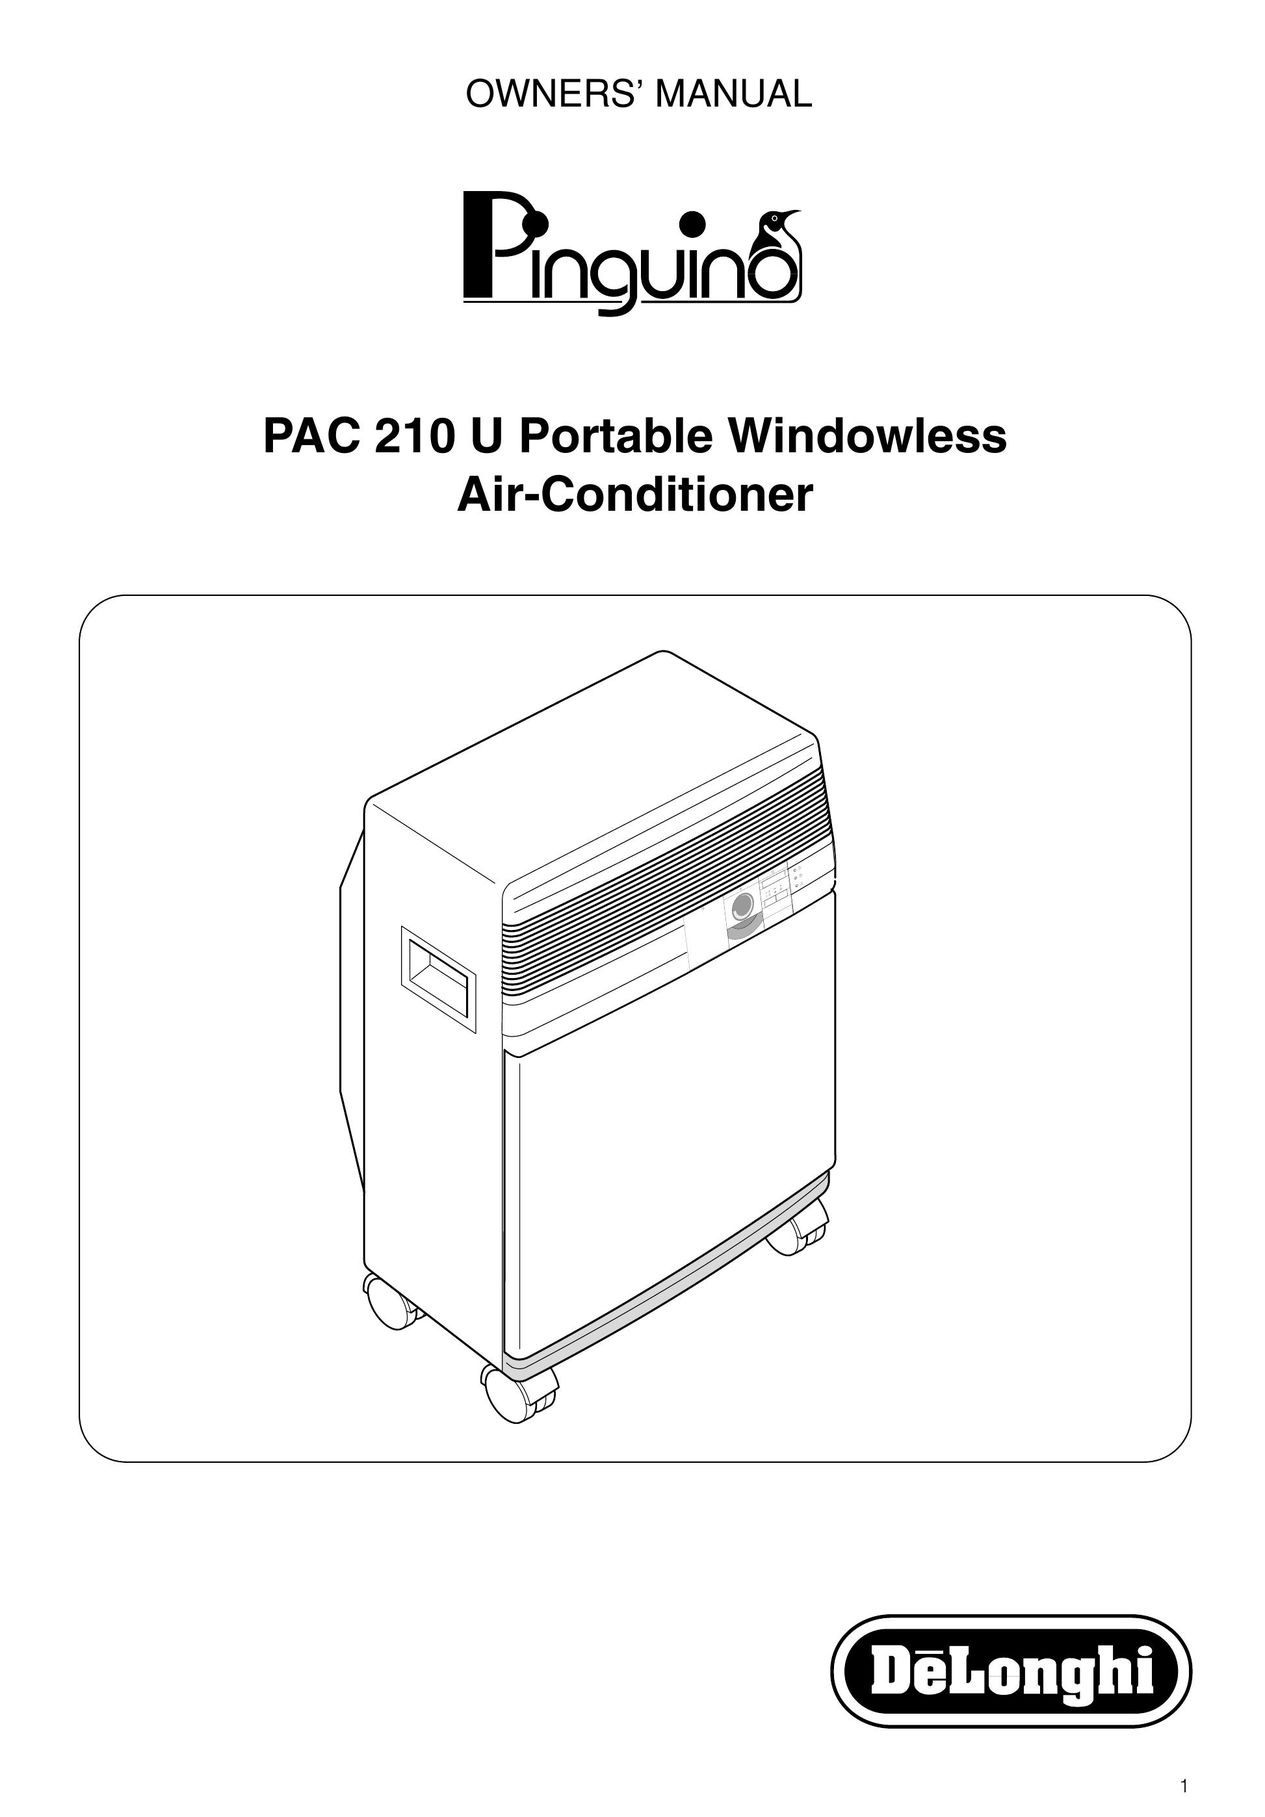 DeLonghi PAC 210 U Air Conditioner User Manual